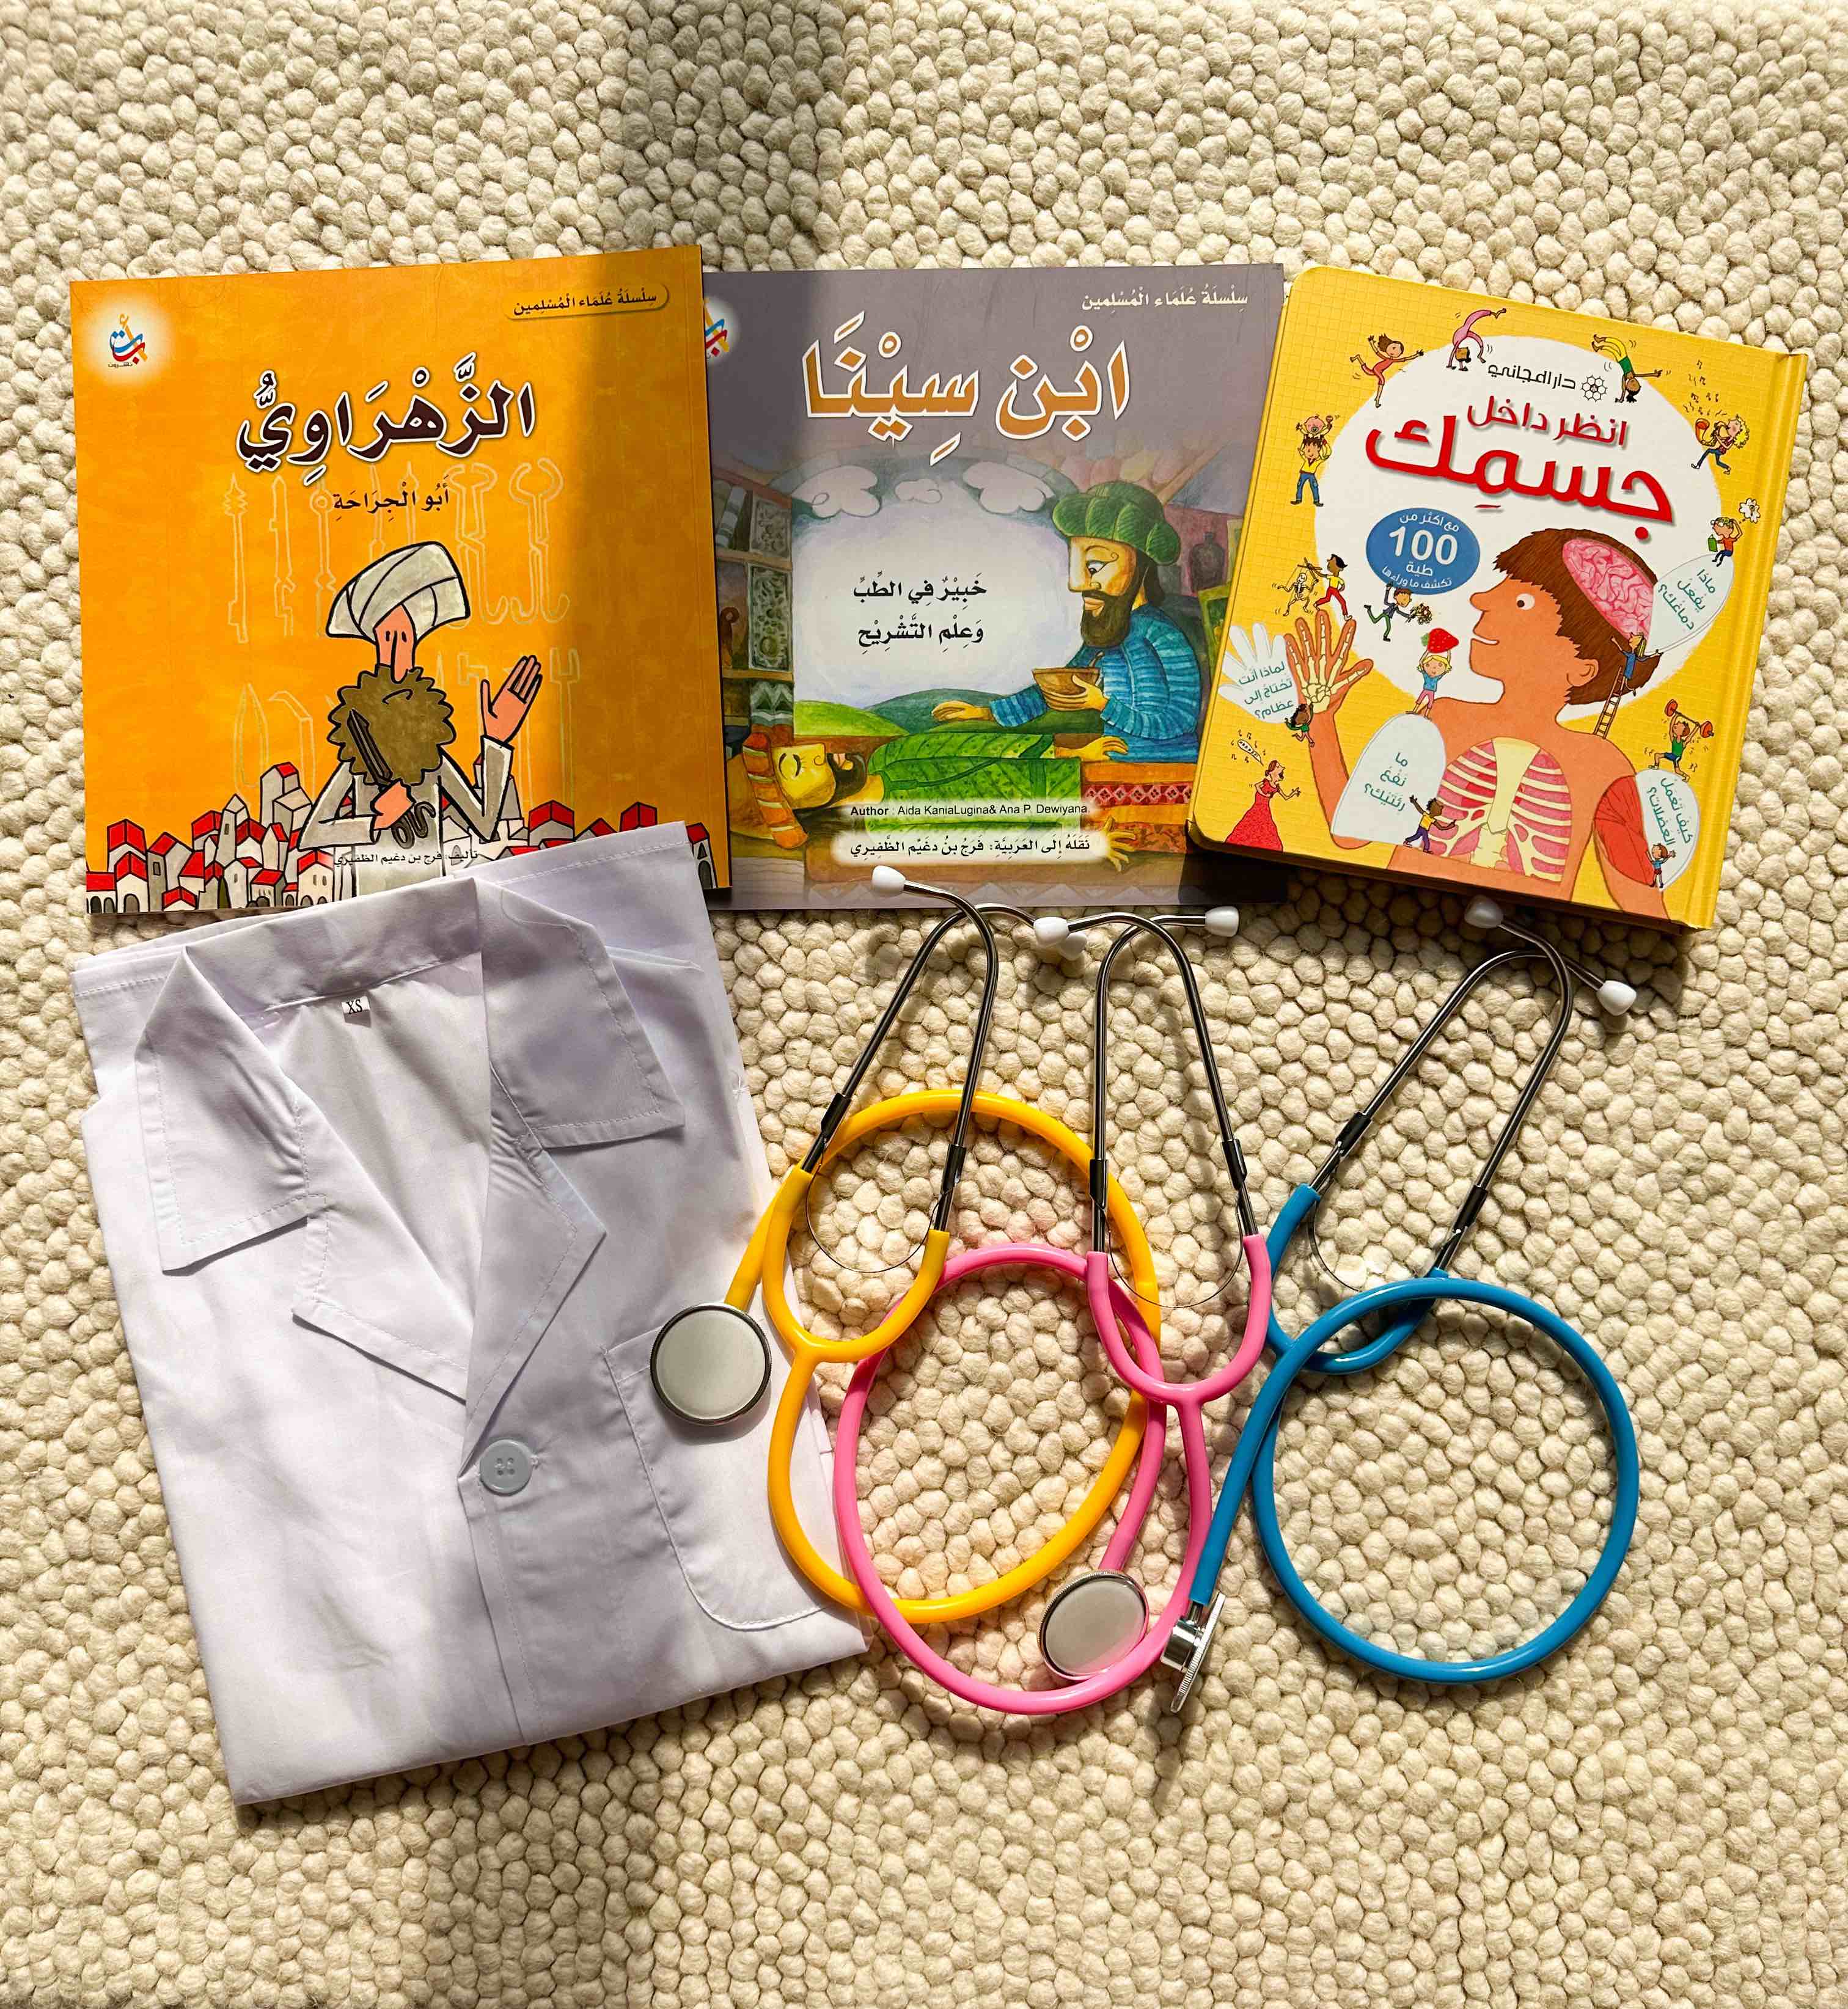 Arabic books about Medicine for children, Muslim scientists